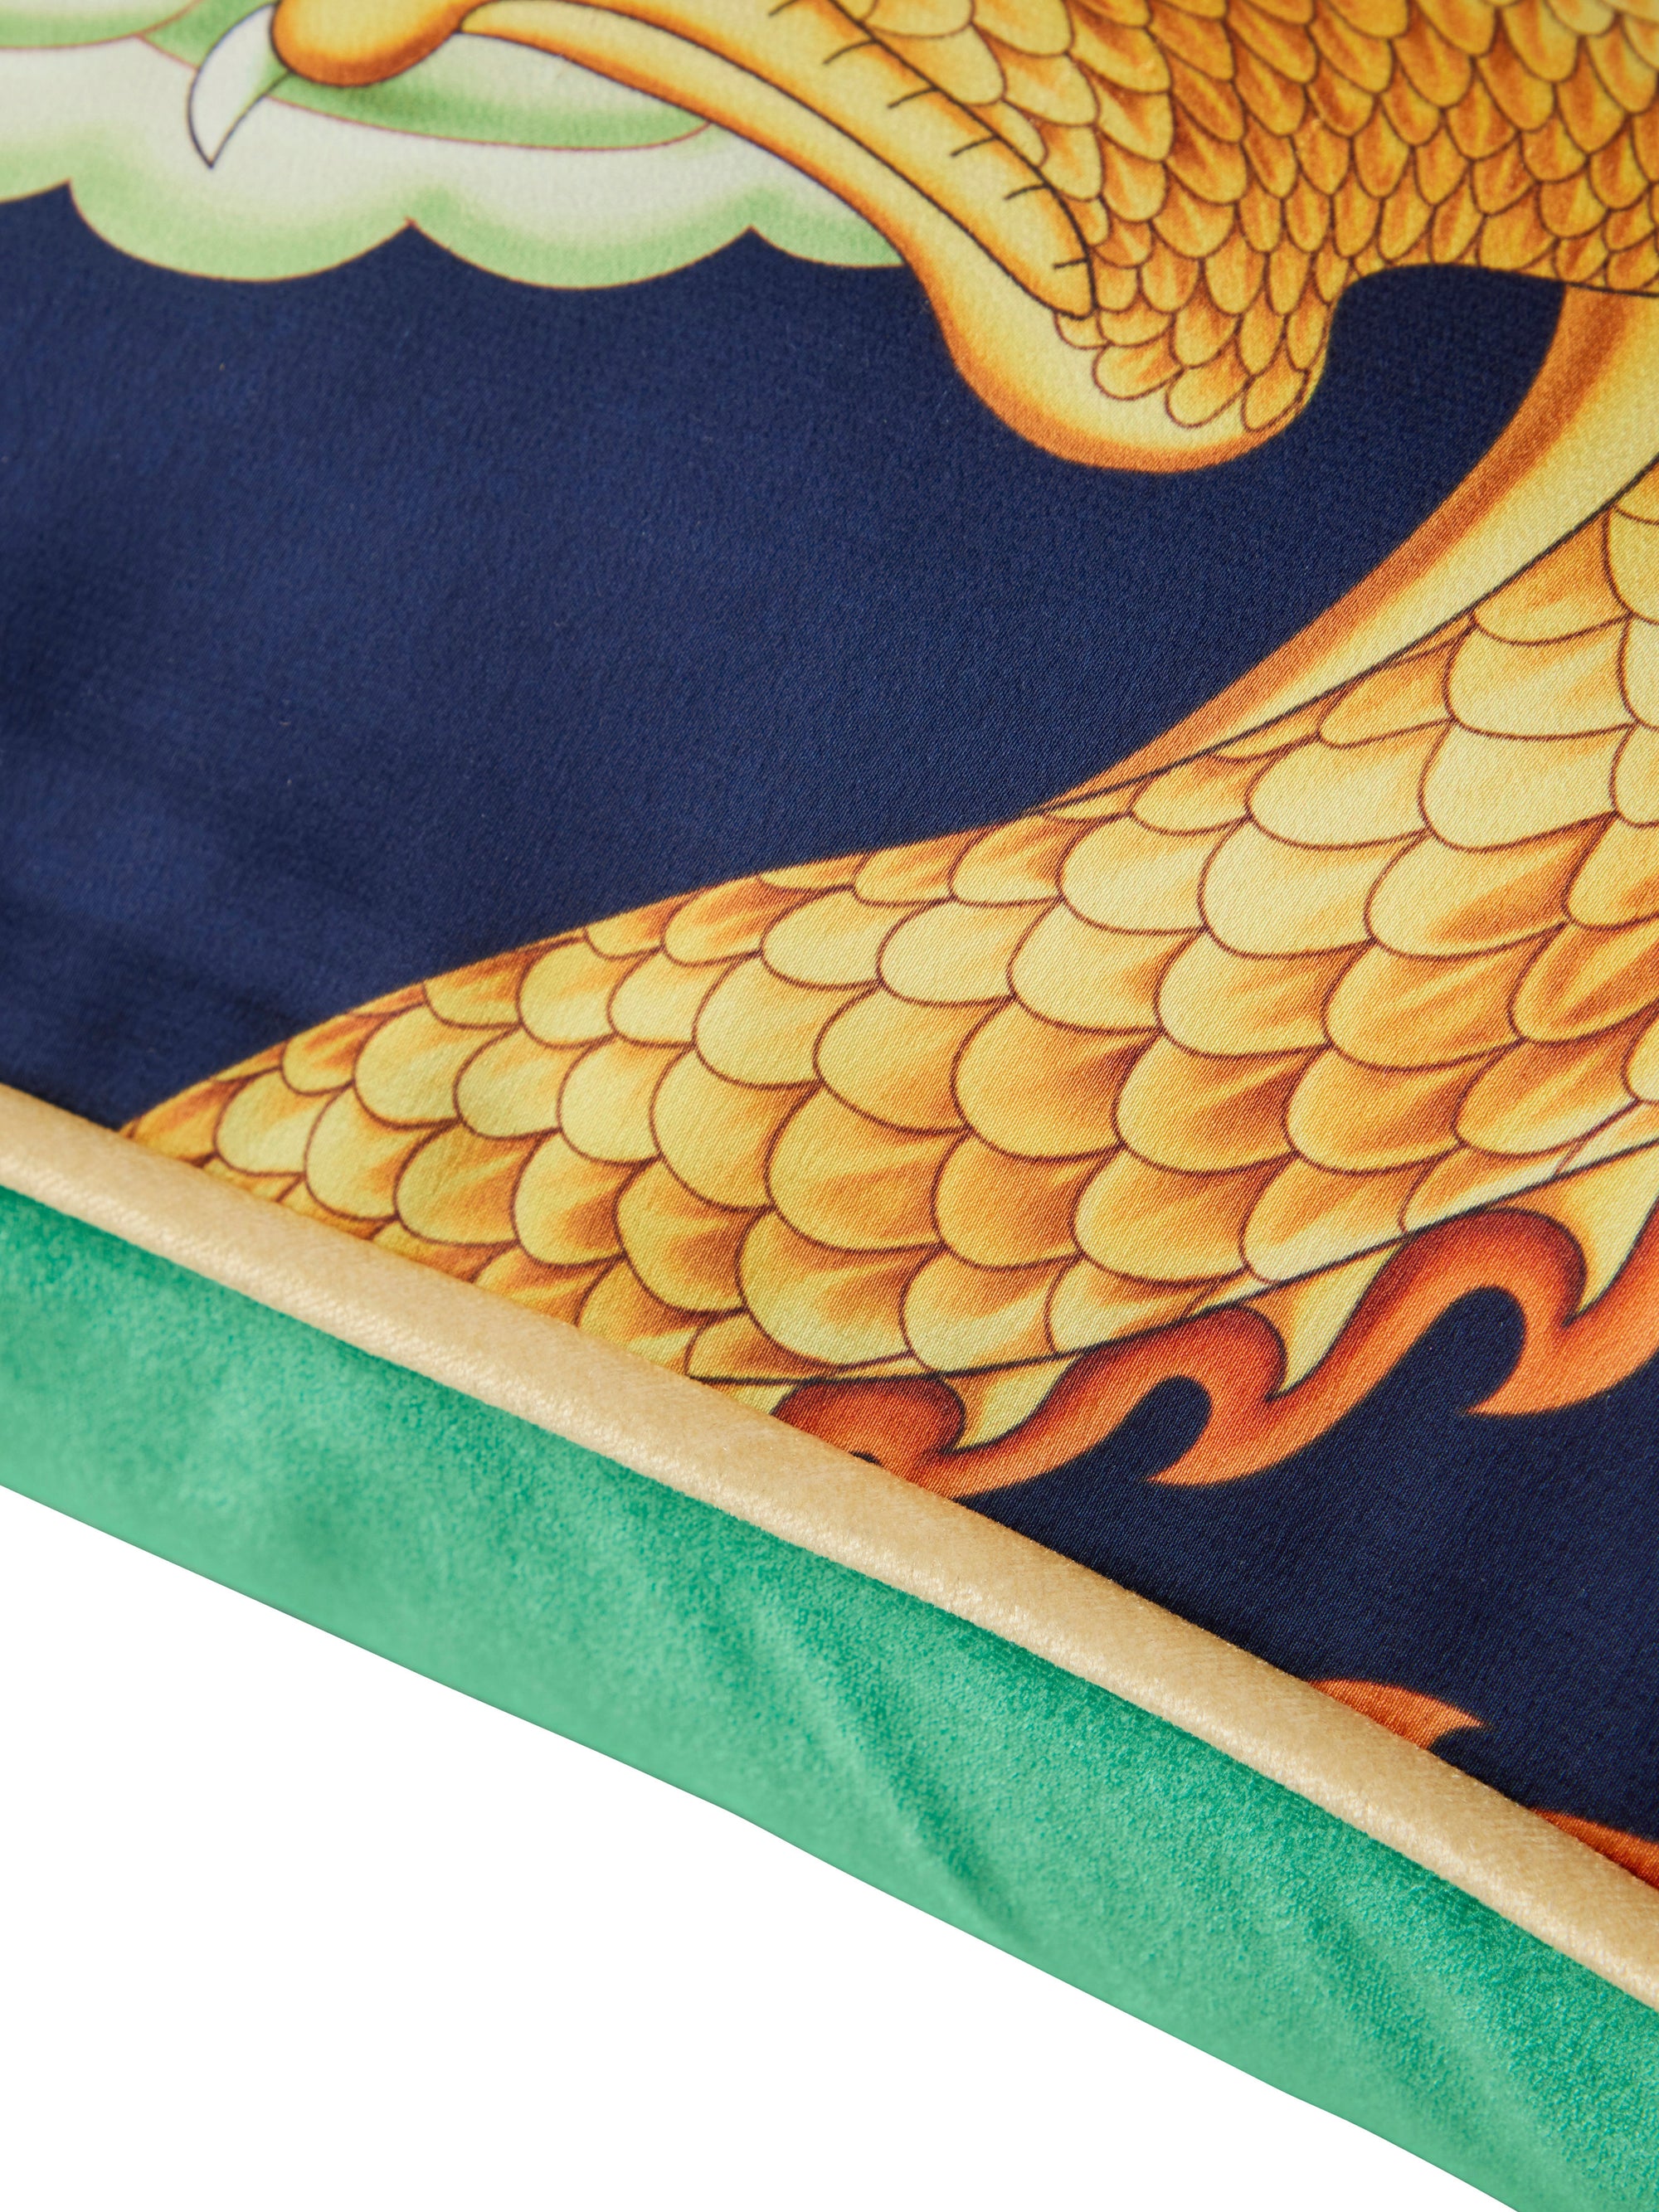 pillowcase, dragon blue